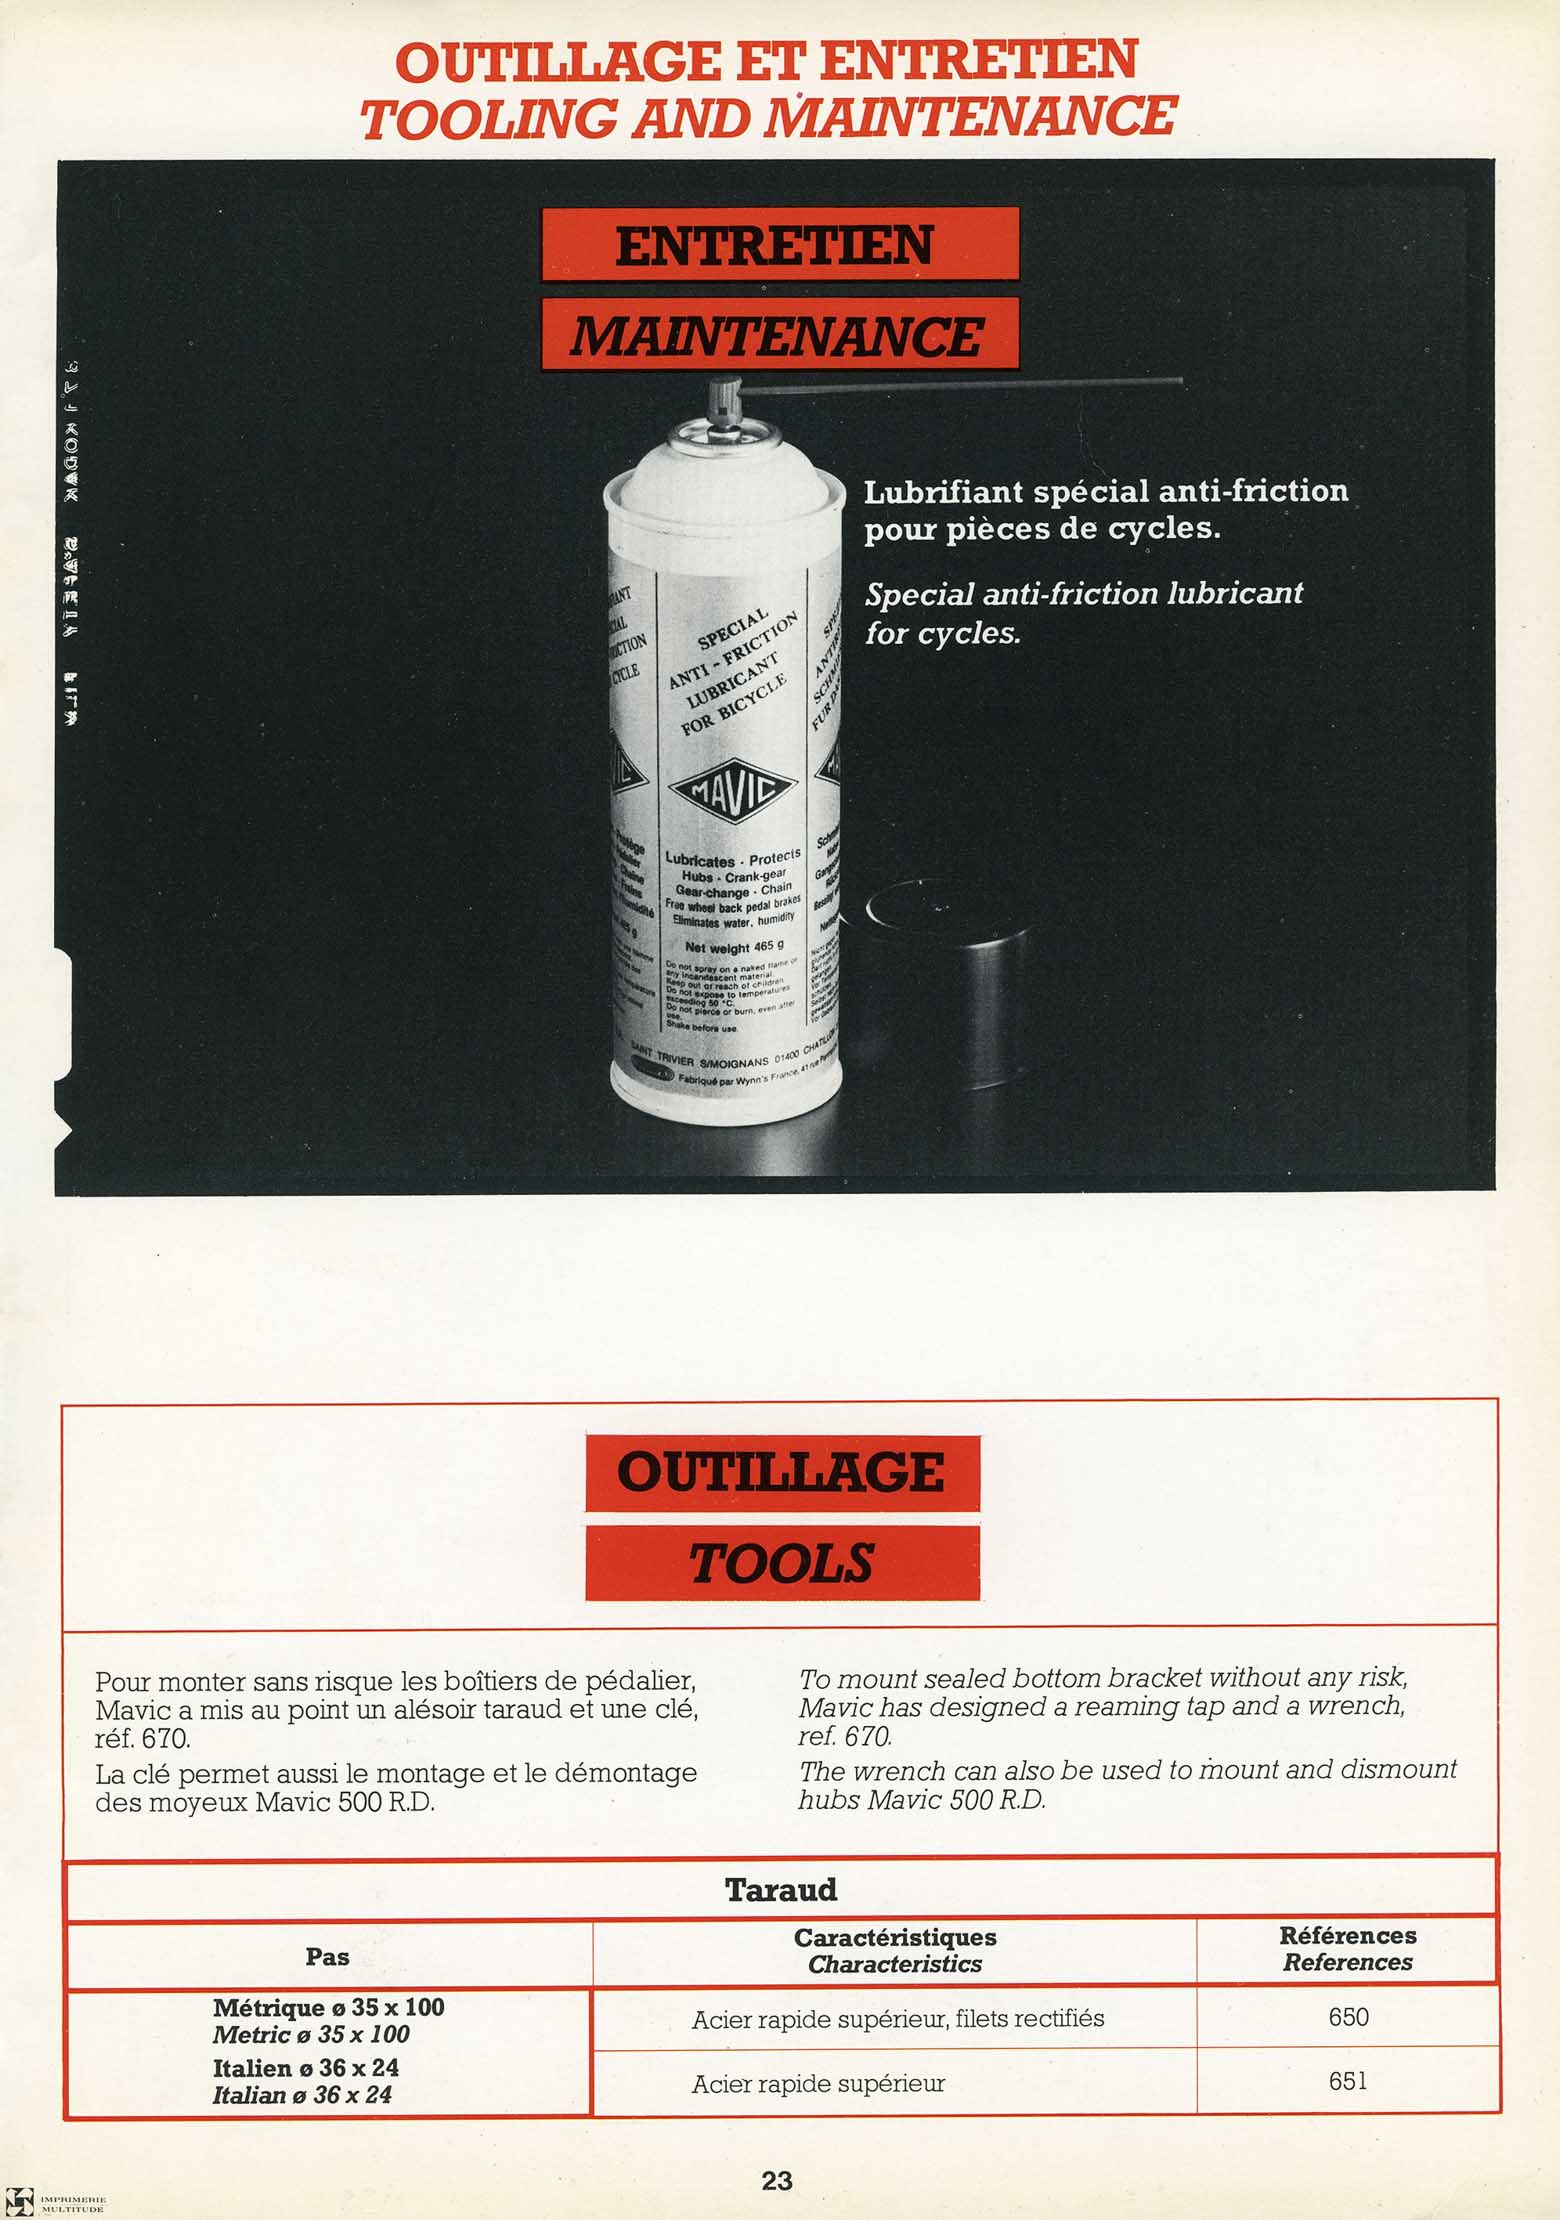 Mavic - Catalogue 1980? page 23 main image